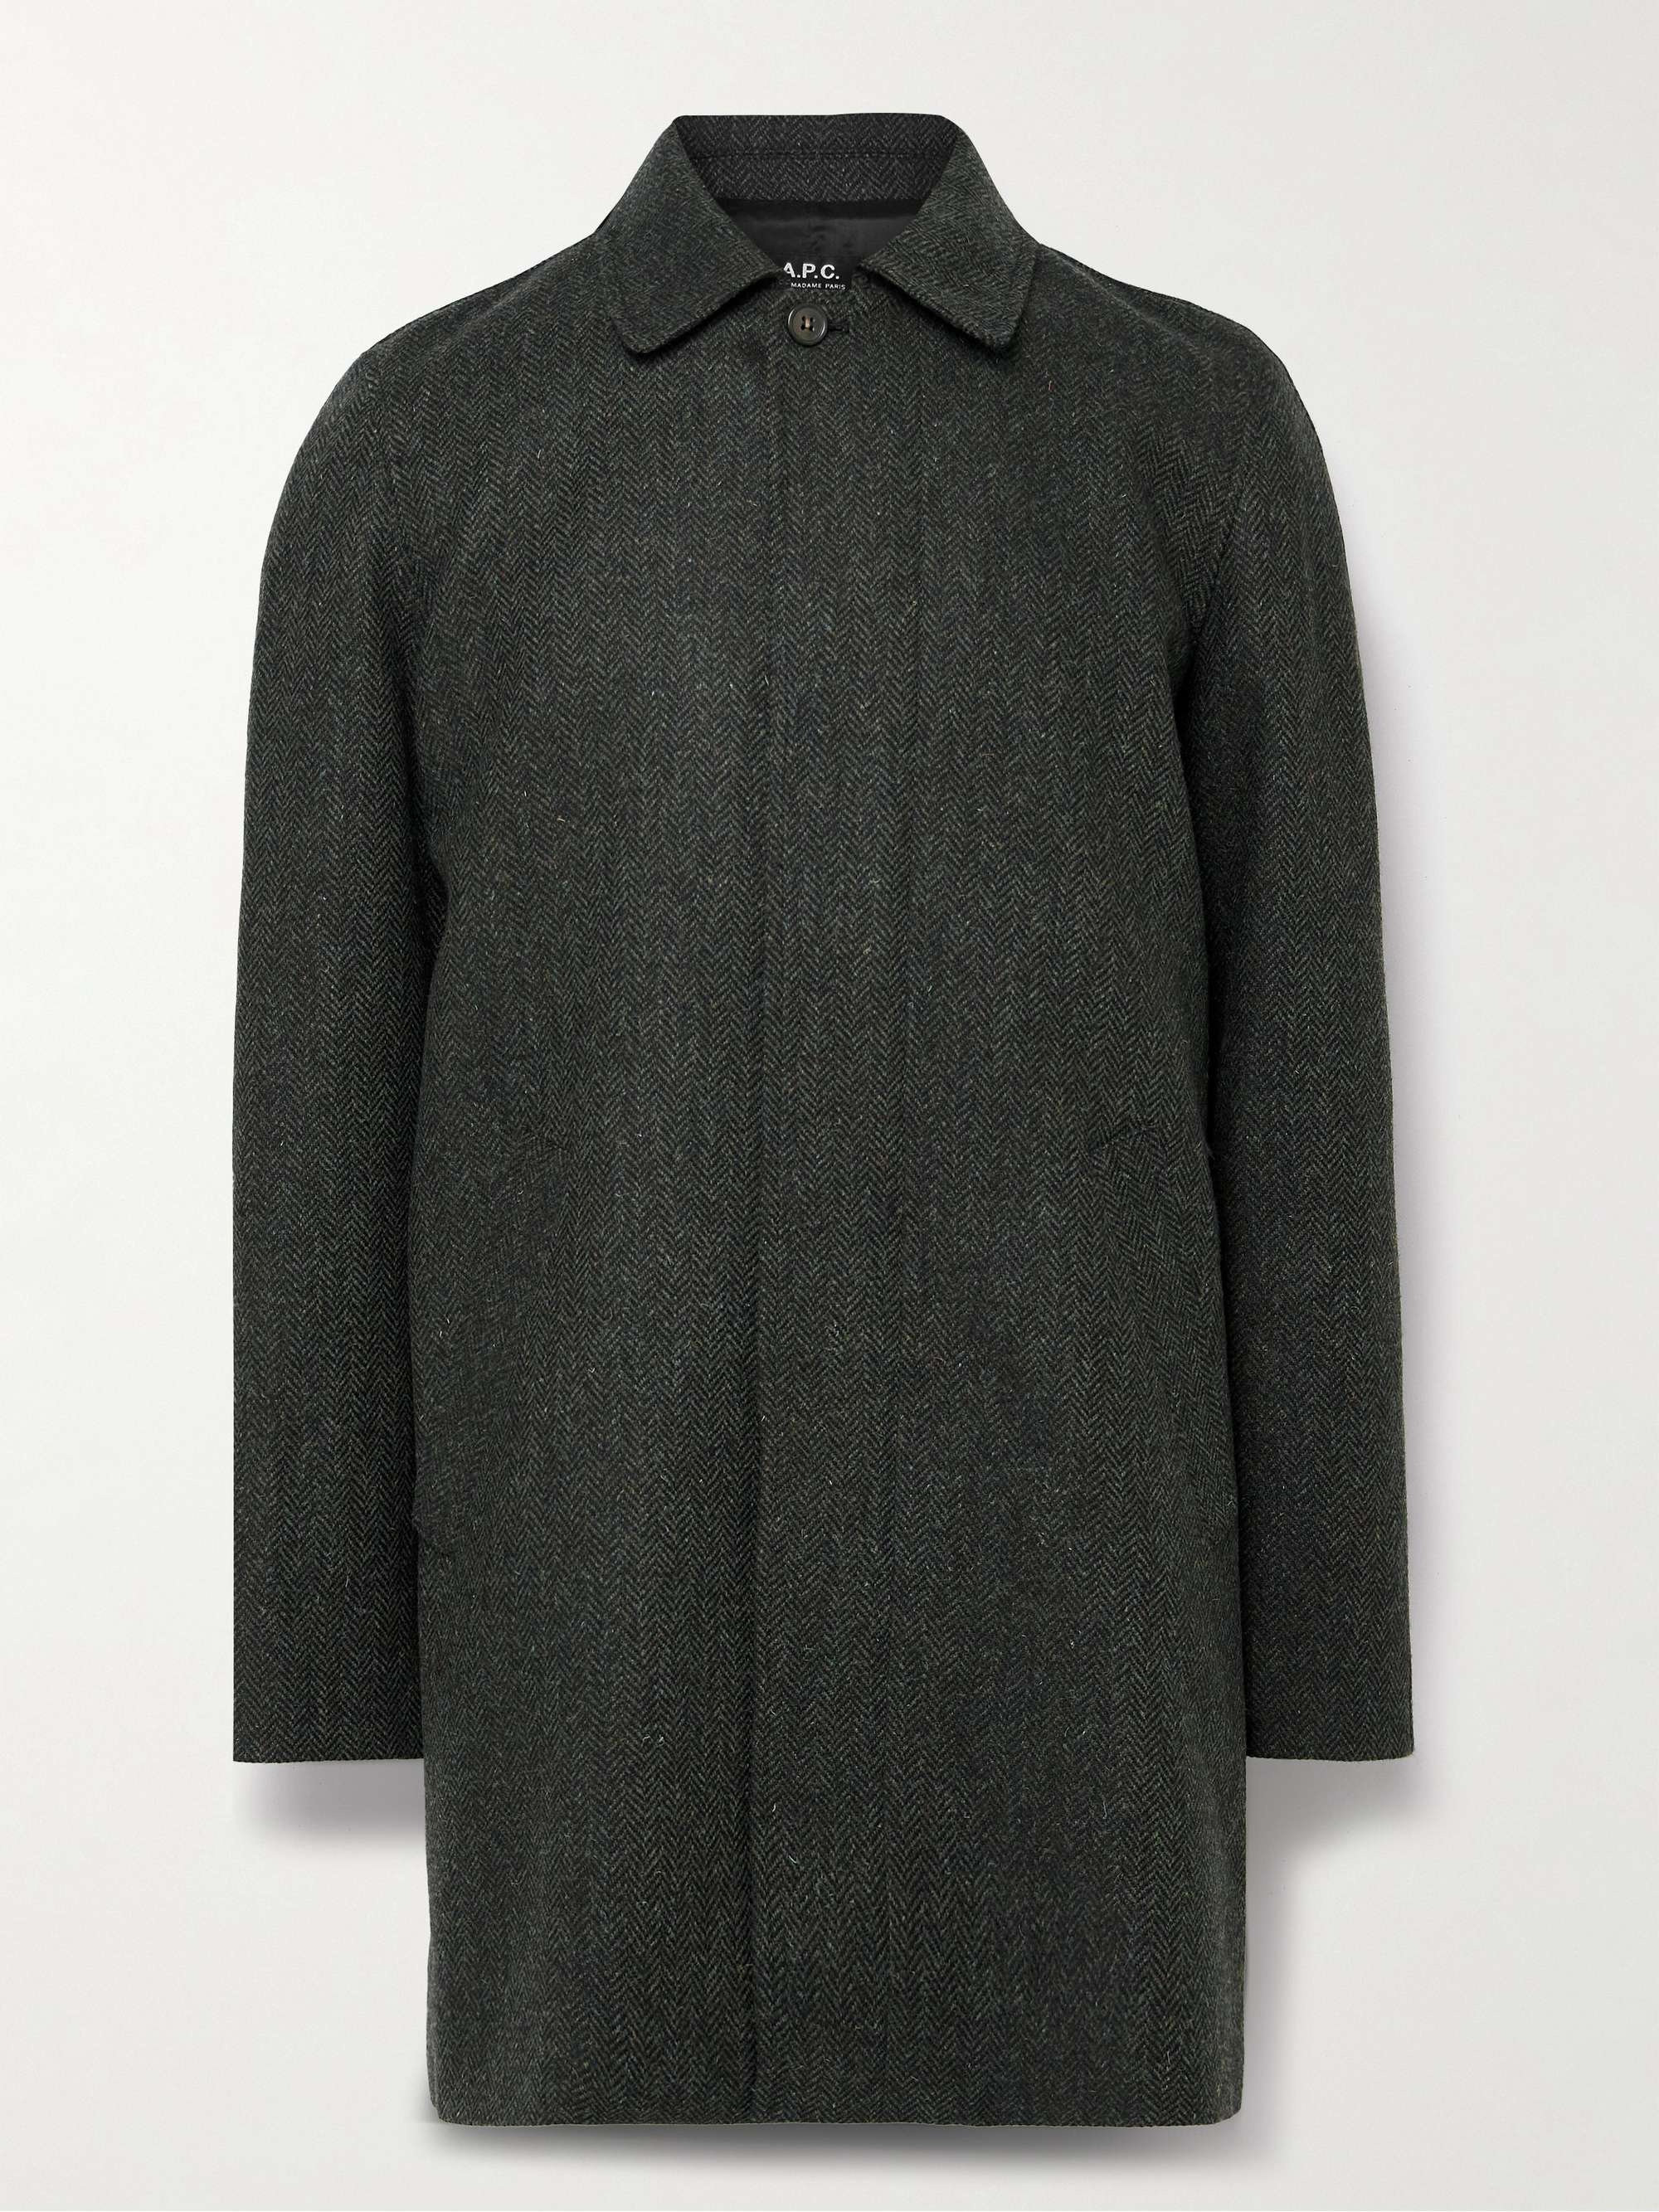 A.P.C. Pete Herringbone Virgin Wool Coat for Men | MR PORTER